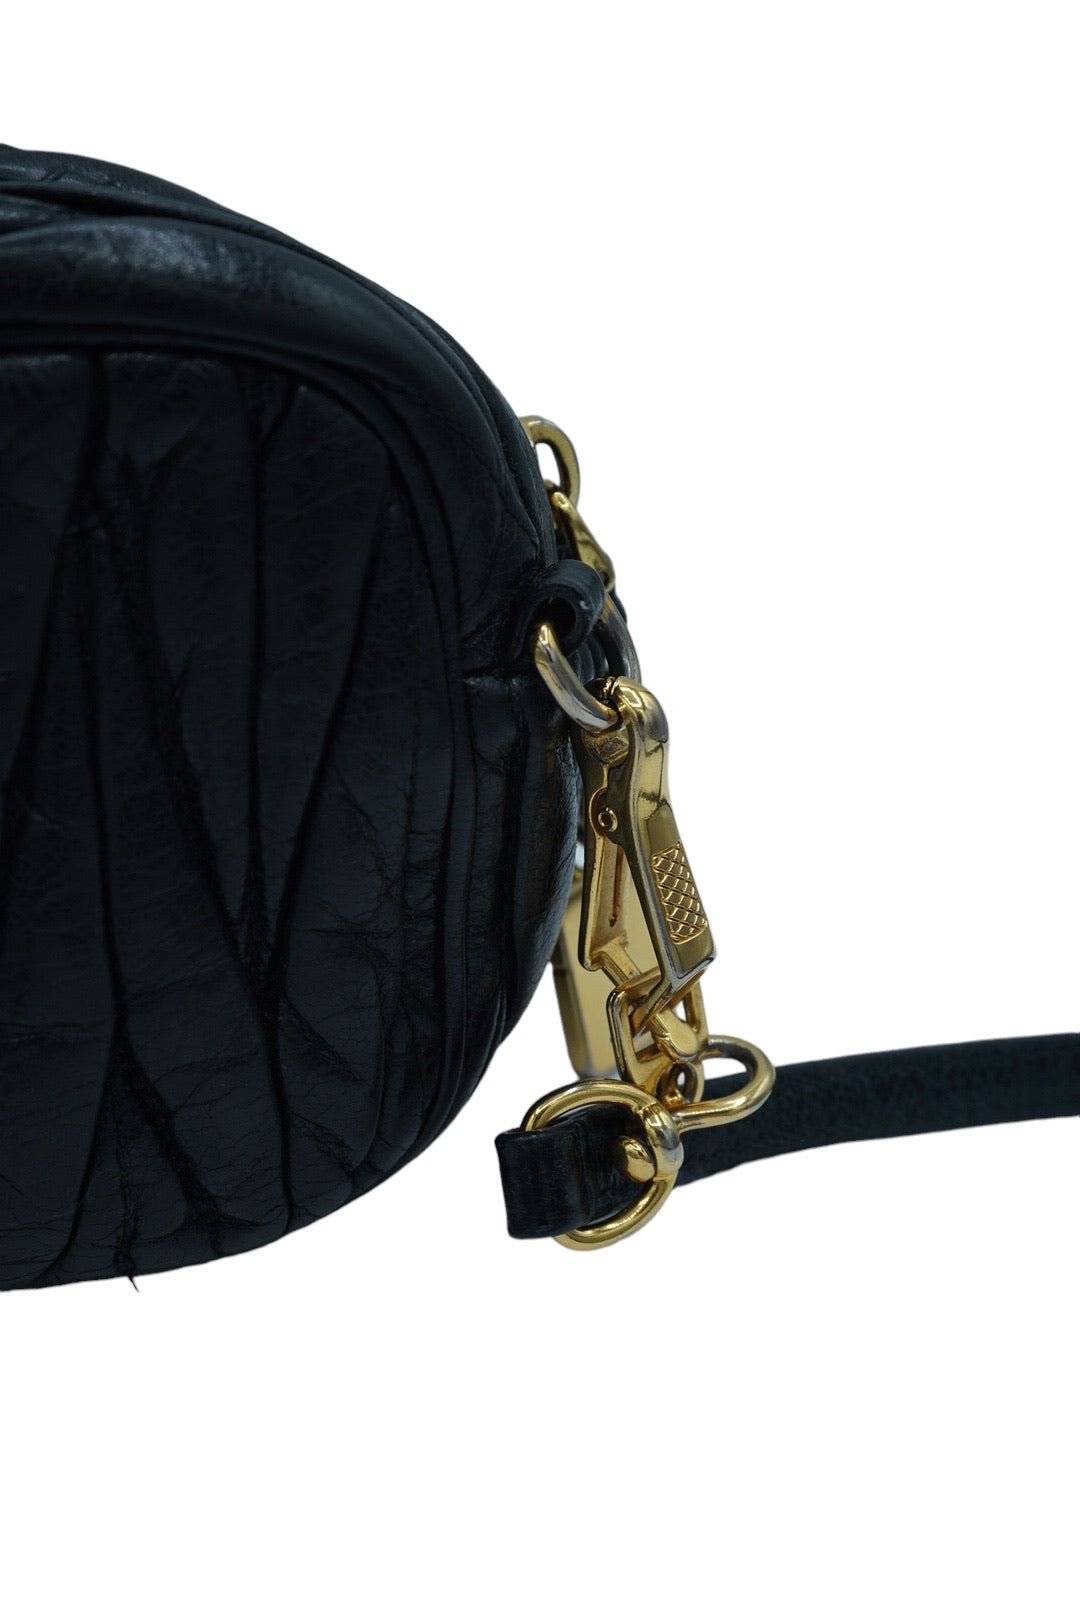 MIU MIU - Black Camera Crossbody Bag